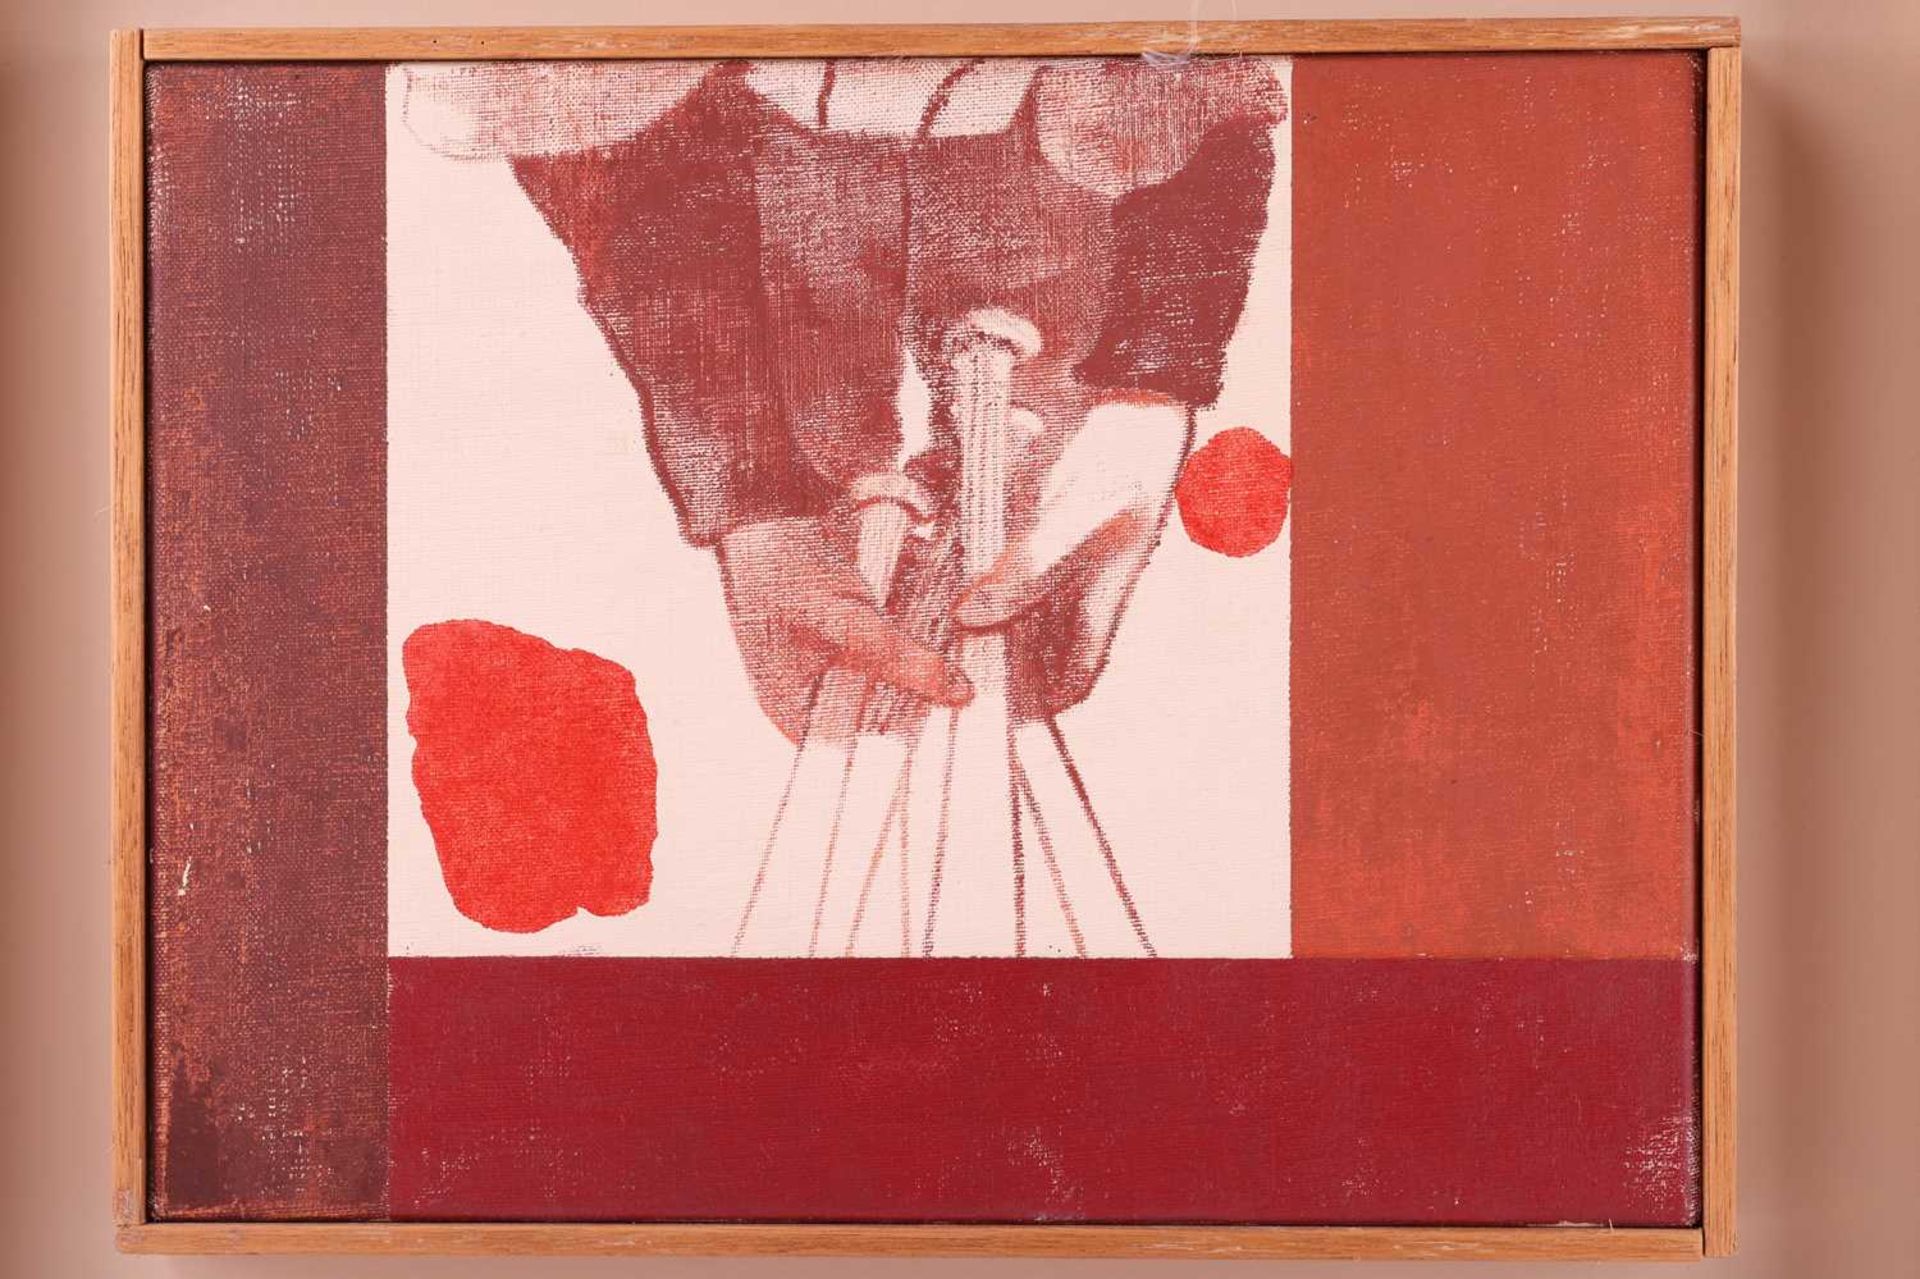 Ronald Brooks Kitaj (1932-2007), 'Batboy' (1967), inscribed verso, oil on canvas, 30.5 x 40.5 cm, fr - Image 5 of 5